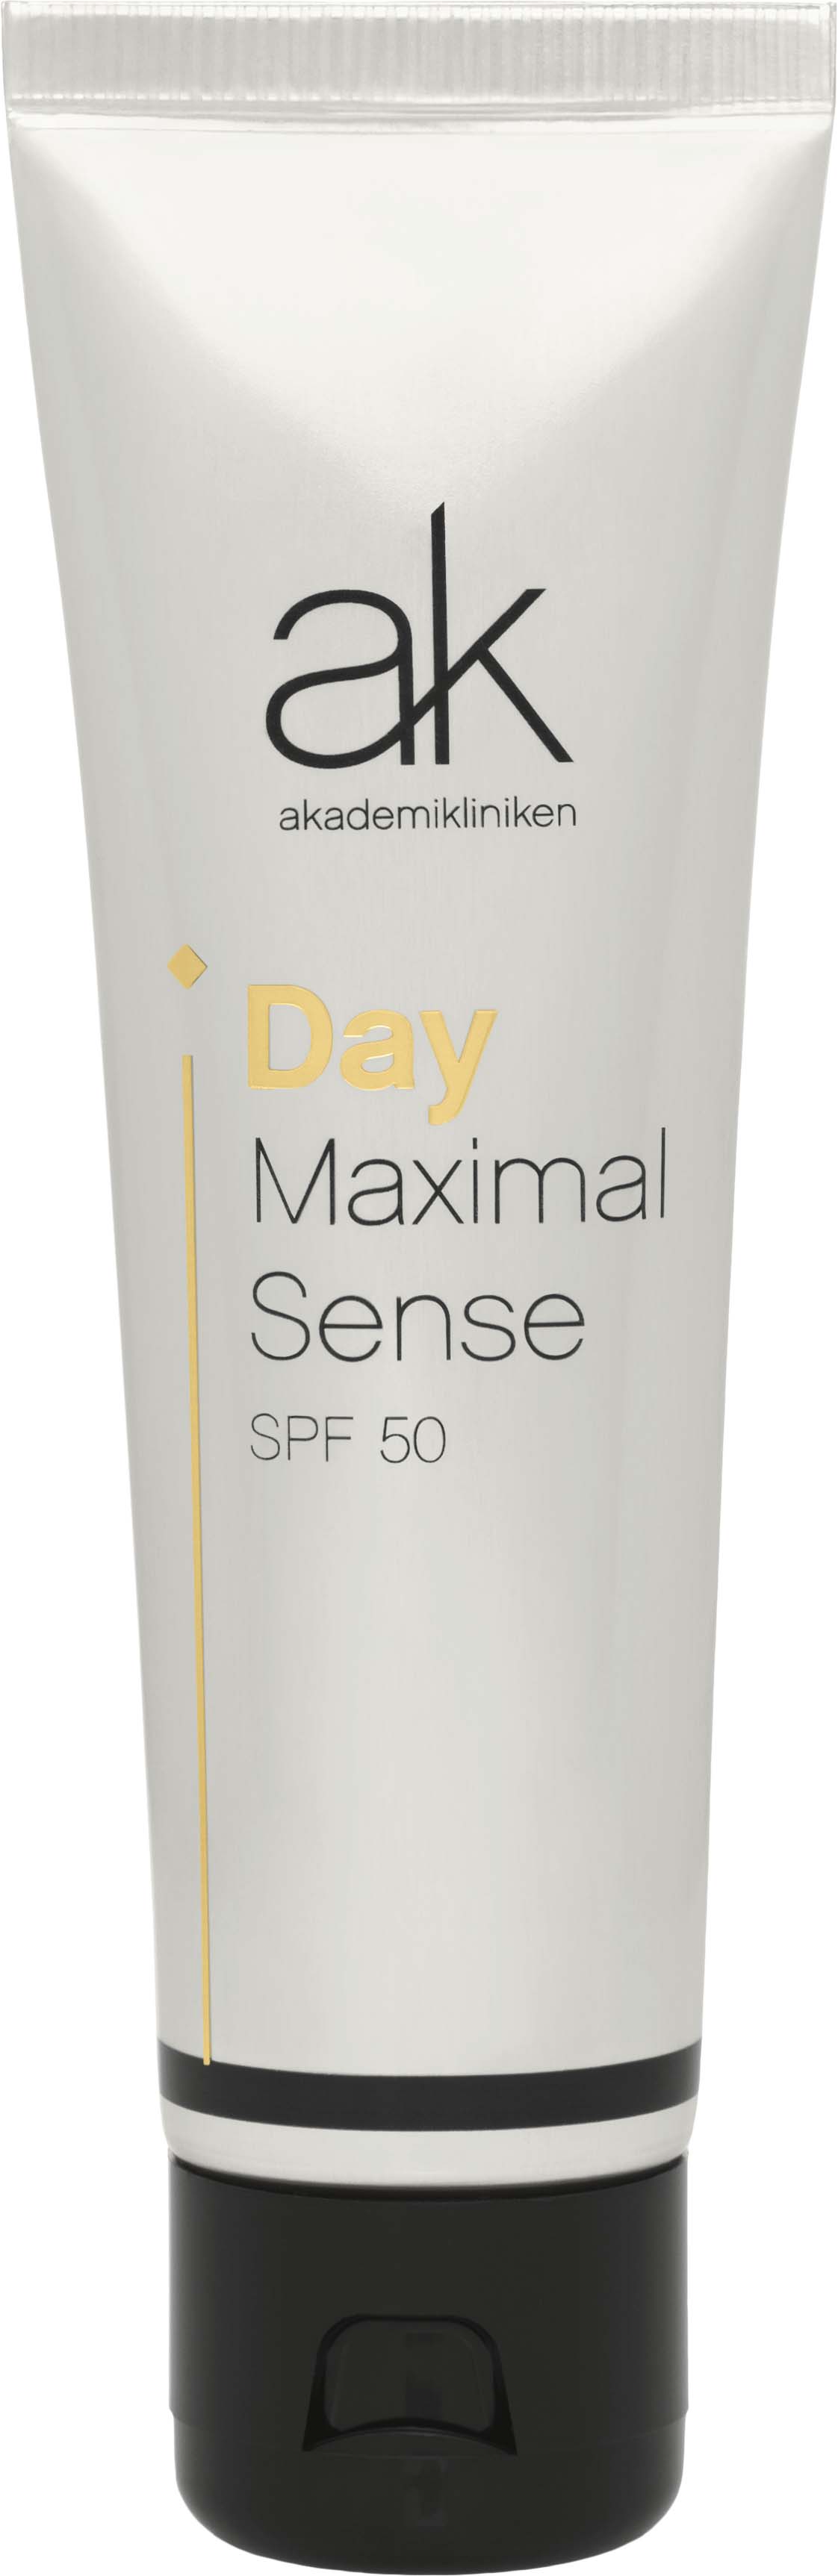 Akademikliniken Day Maximal Sense SPF50 50 ml